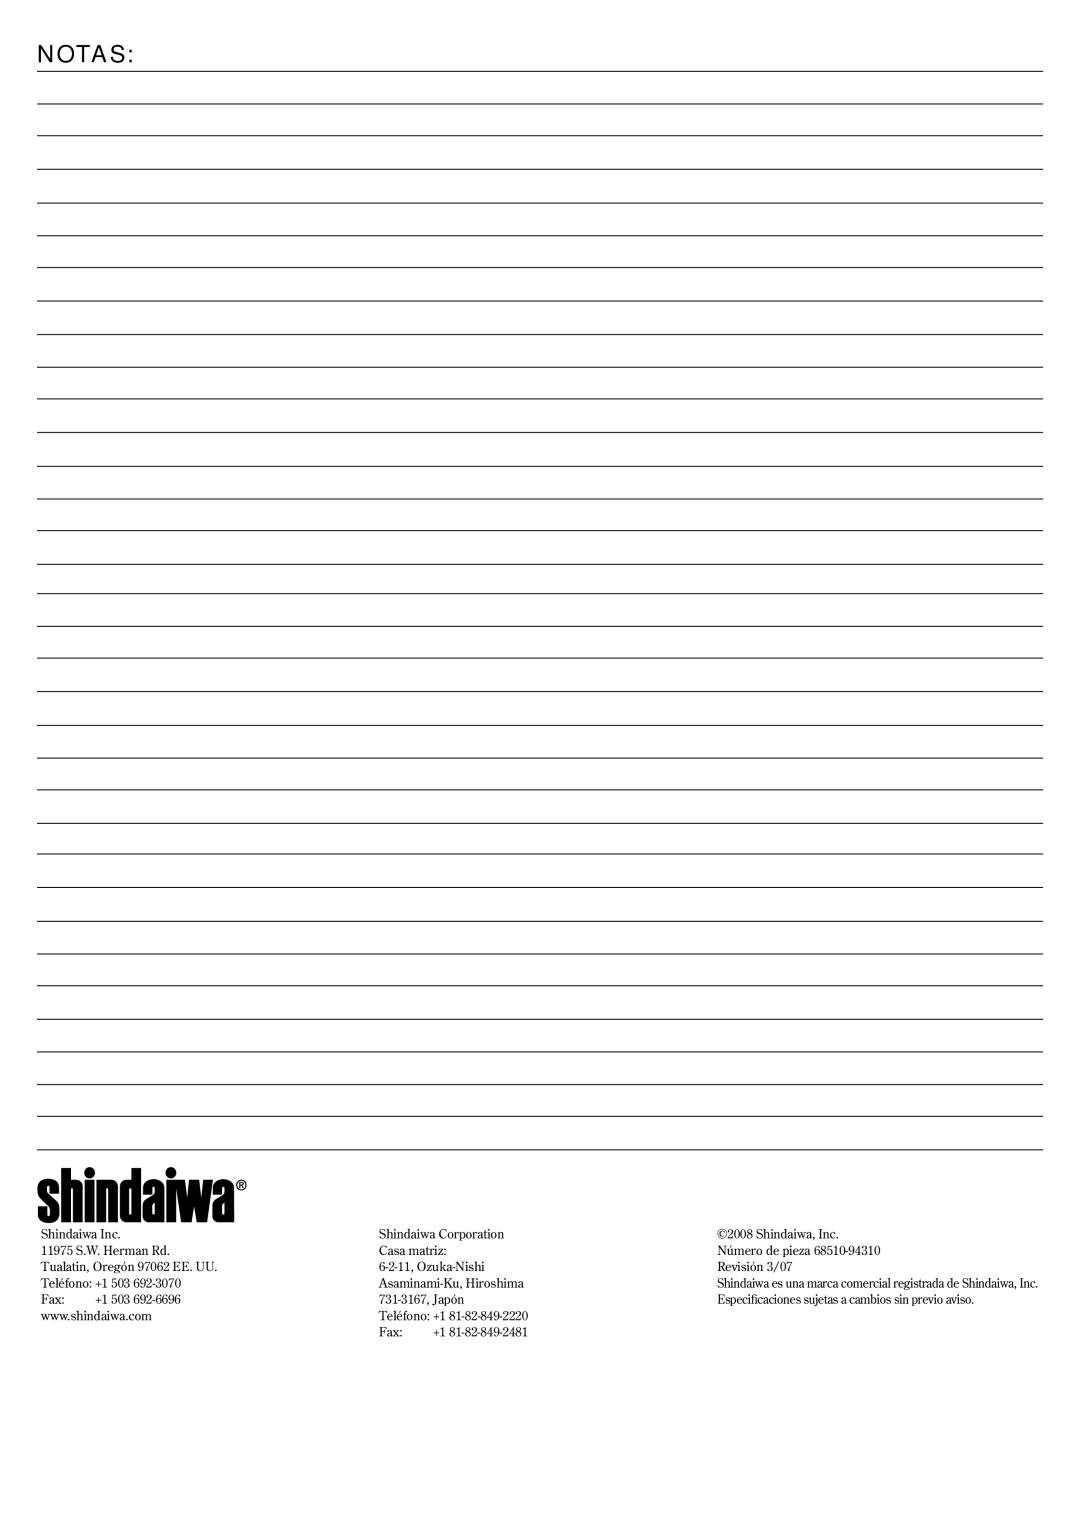 Shindaiwa 6850-9430, GP3410 manual Notas, Shindaiwa Inc 